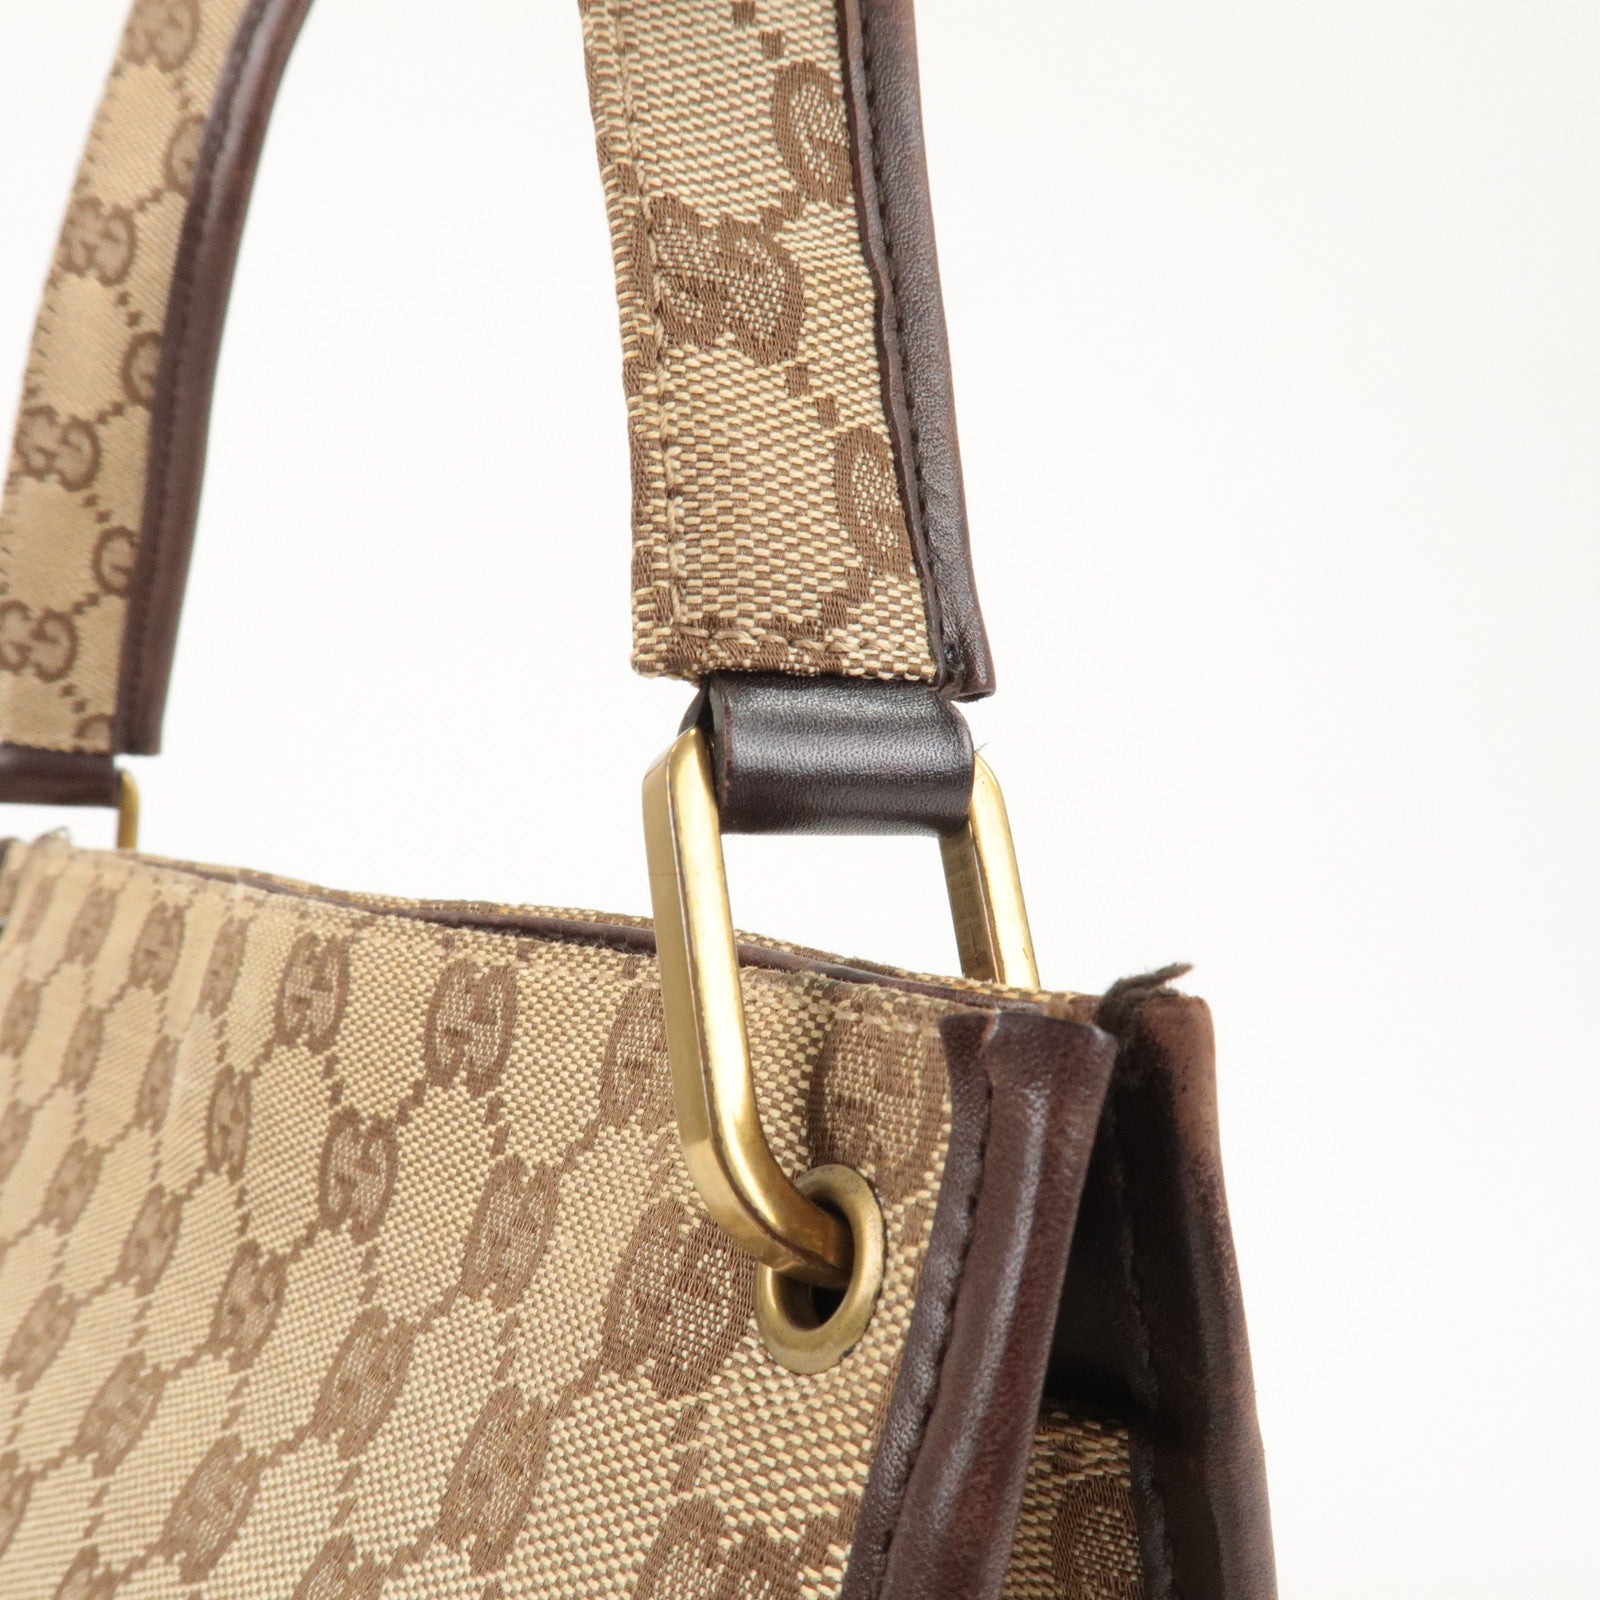 Gucci-GG-Canvas-Leather-Shoulder-Bag-Beige-Brown-91762 – dct